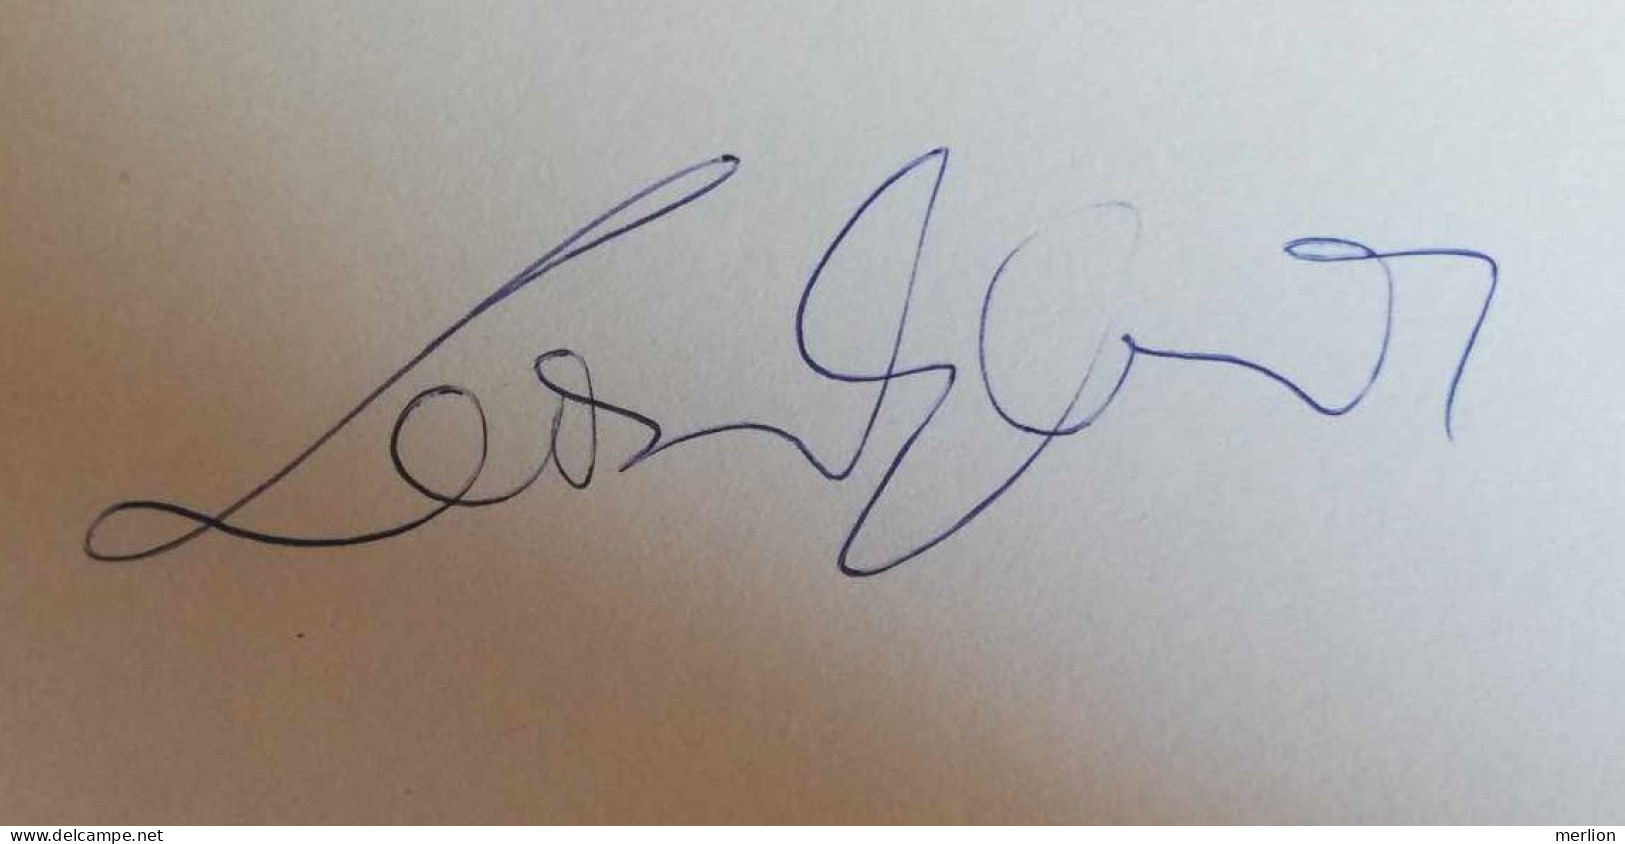 D203327  Signature -Autograph  - Gustav Leonhardt (1928–2012) Was A Dutch Musician Church Organist  In Amsterdam - Singers & Musicians